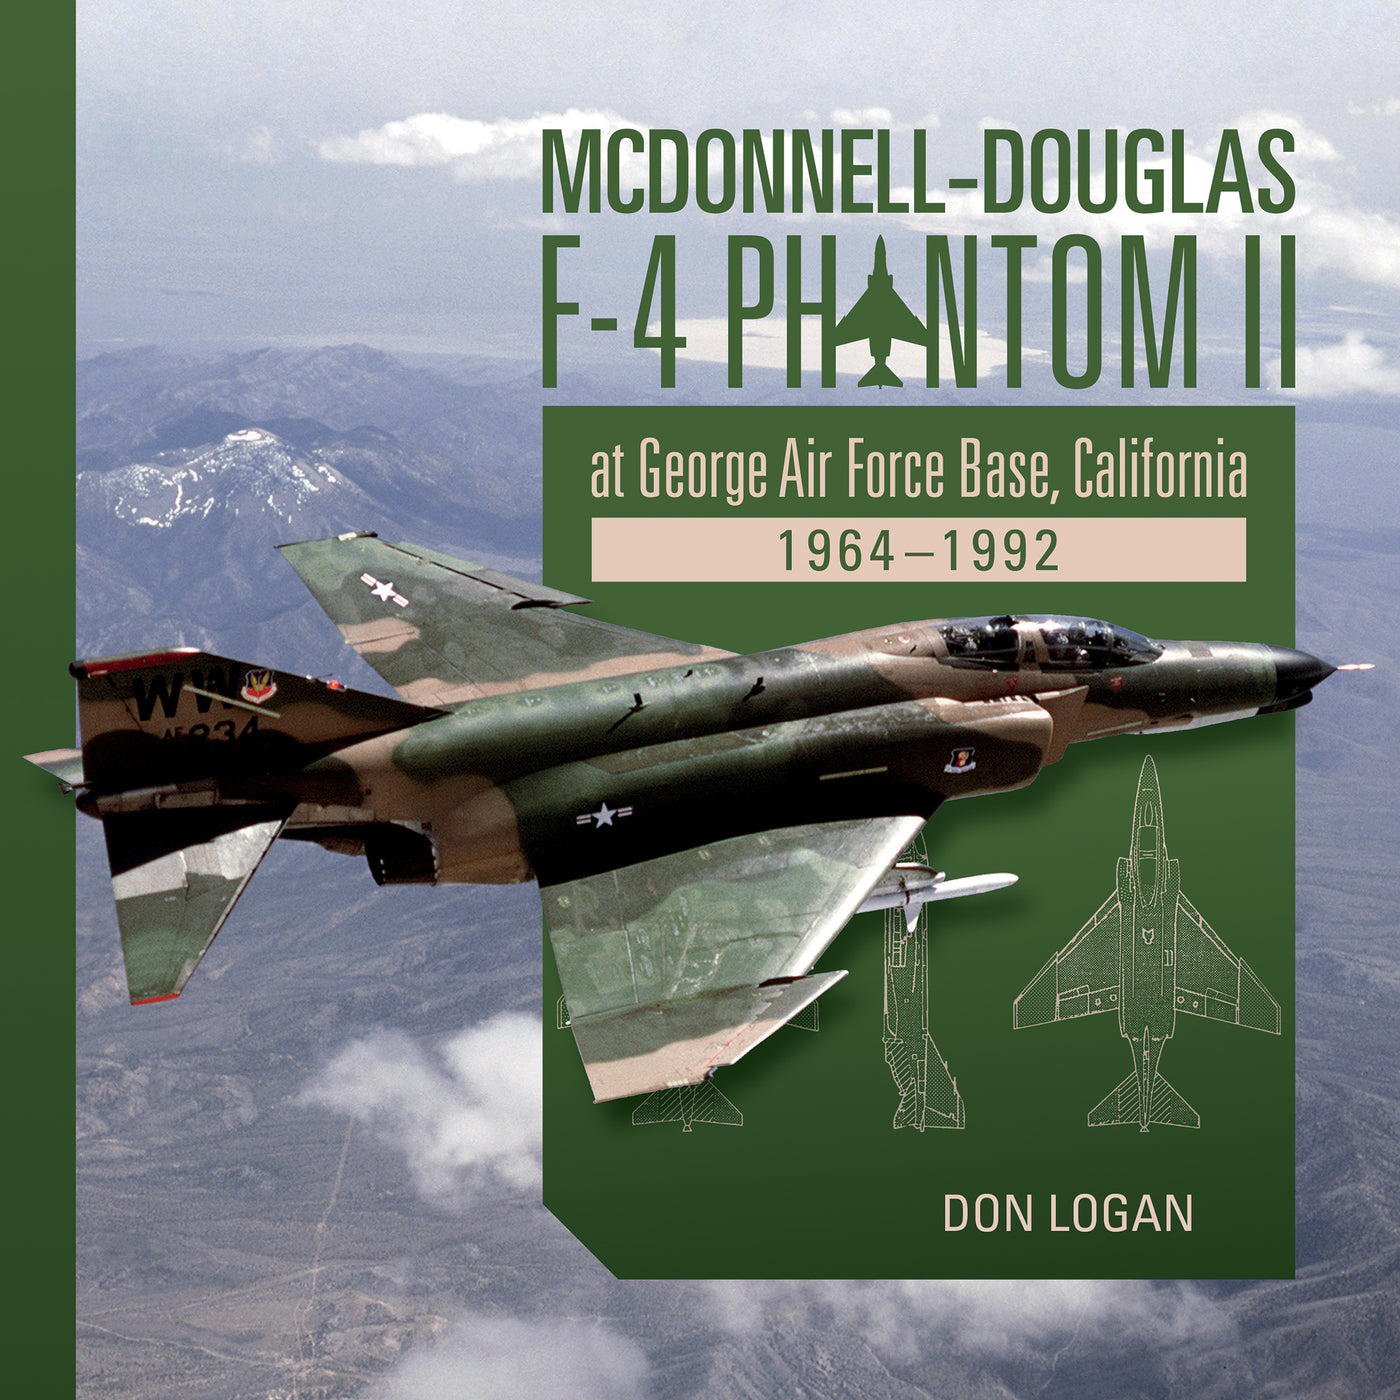 McDonnell-Douglas F-4 Phantom II at George Air Force Base, California